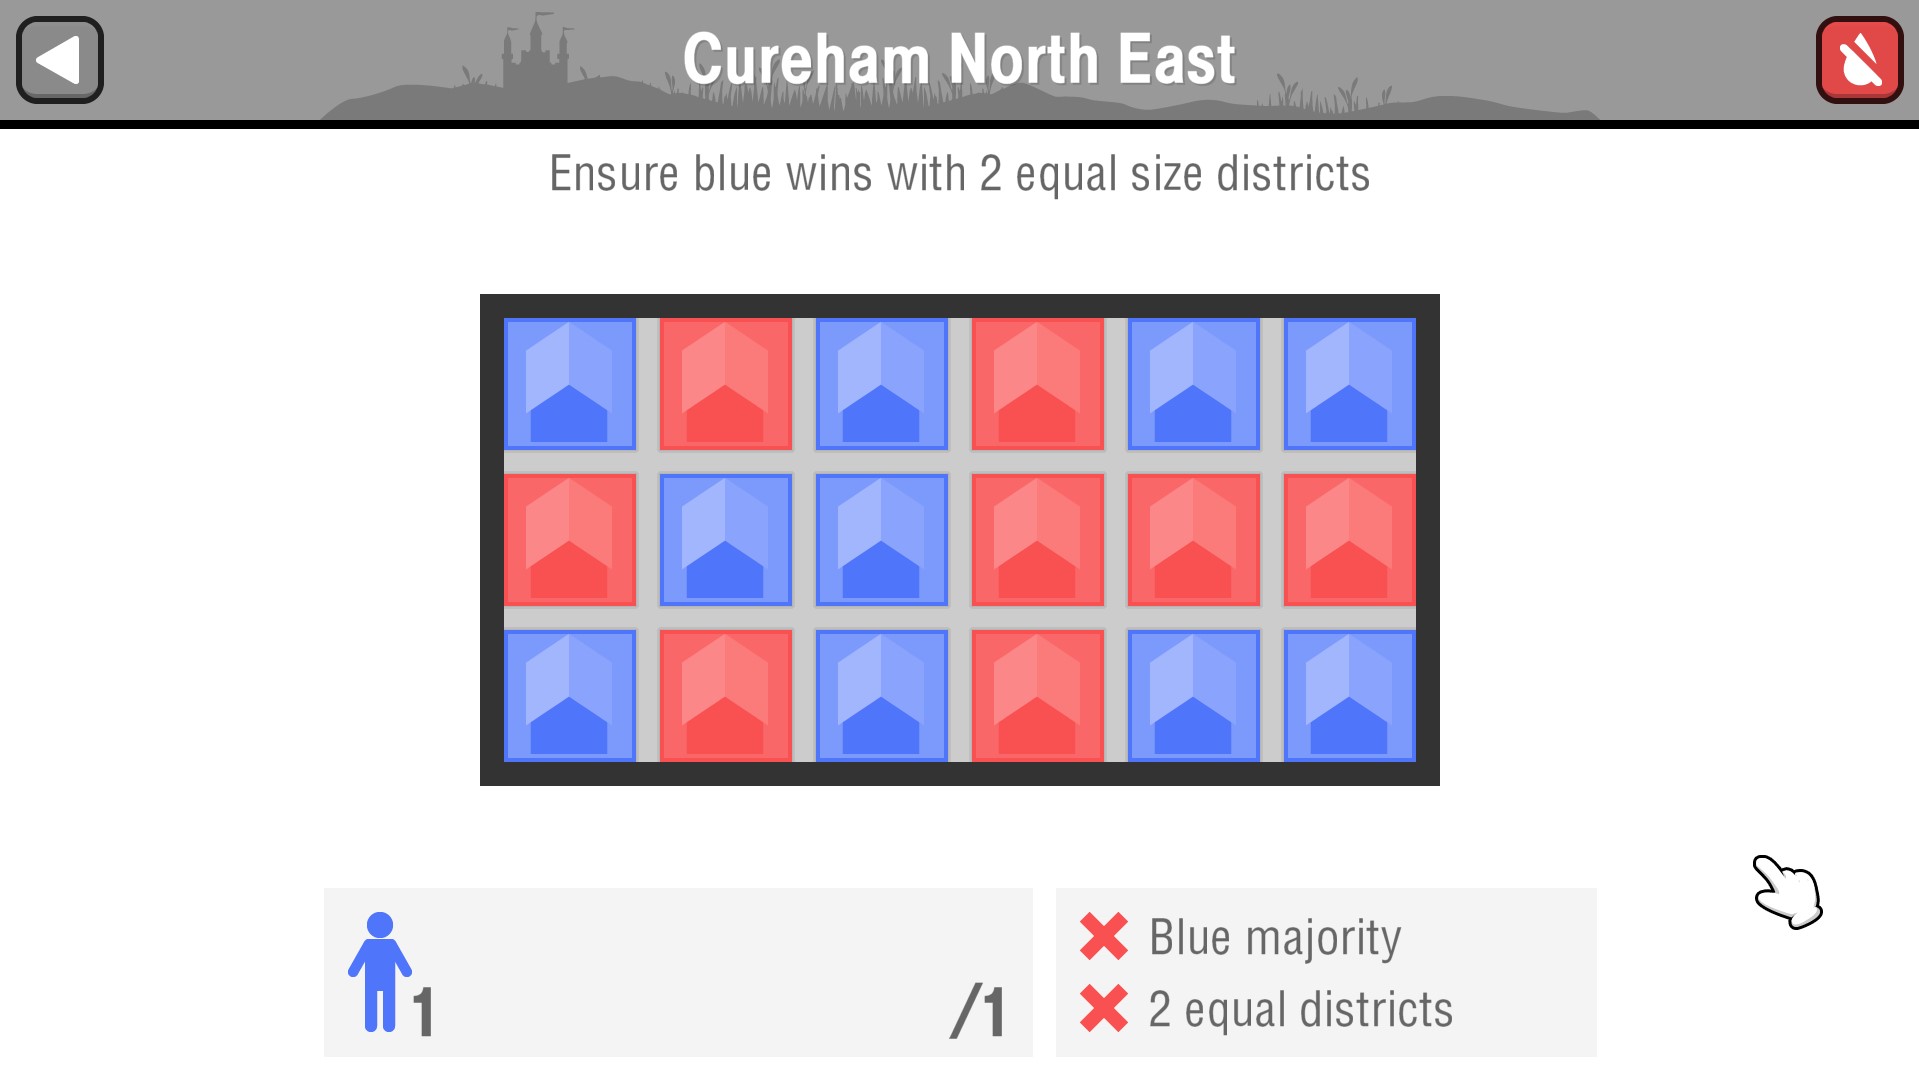 Cureham North East